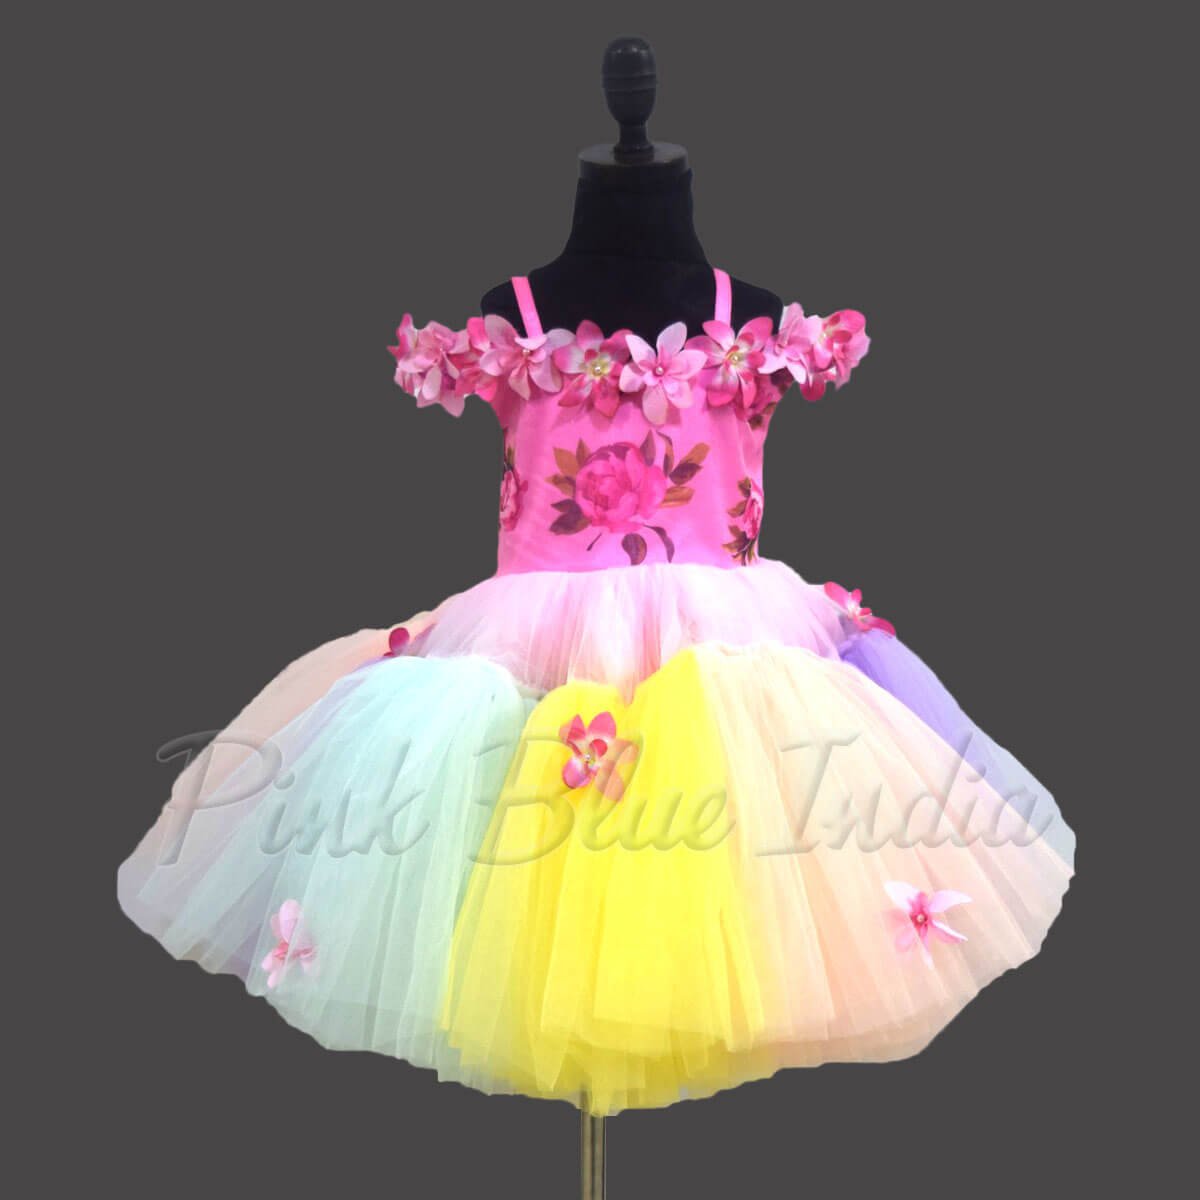 Buy Designer Party Wear Floral Dress for baby girl